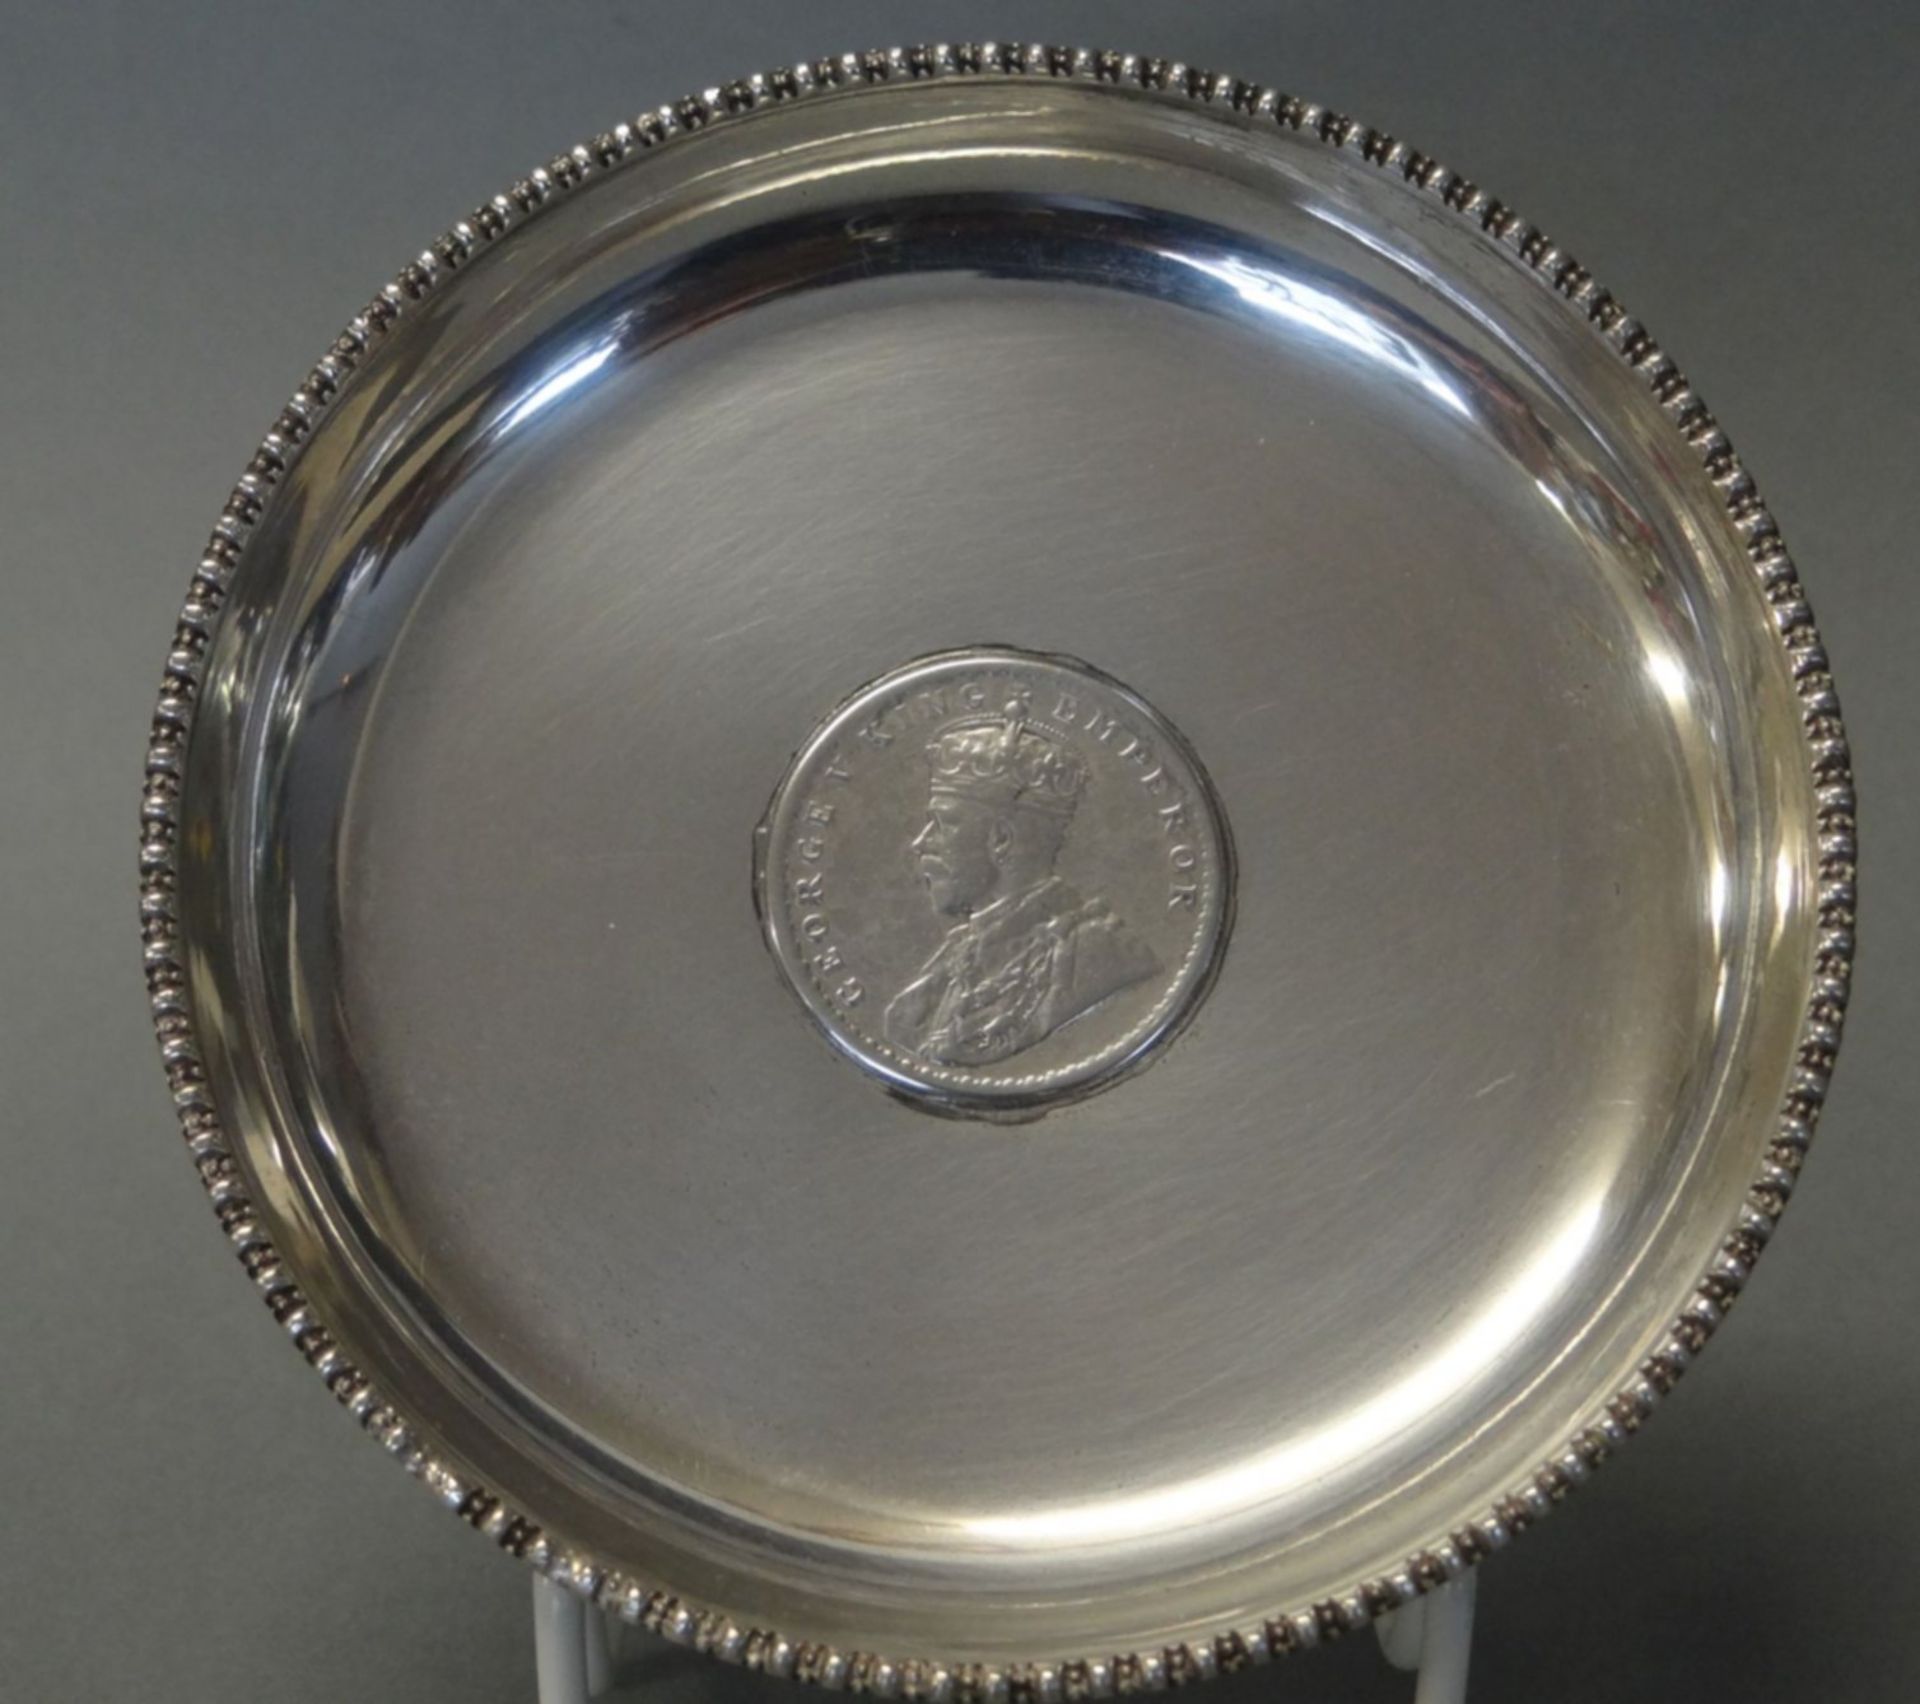 Silber-Münzschale, 1 Rupie, Indien 1918, D-10,5 cm, 82,6 gr